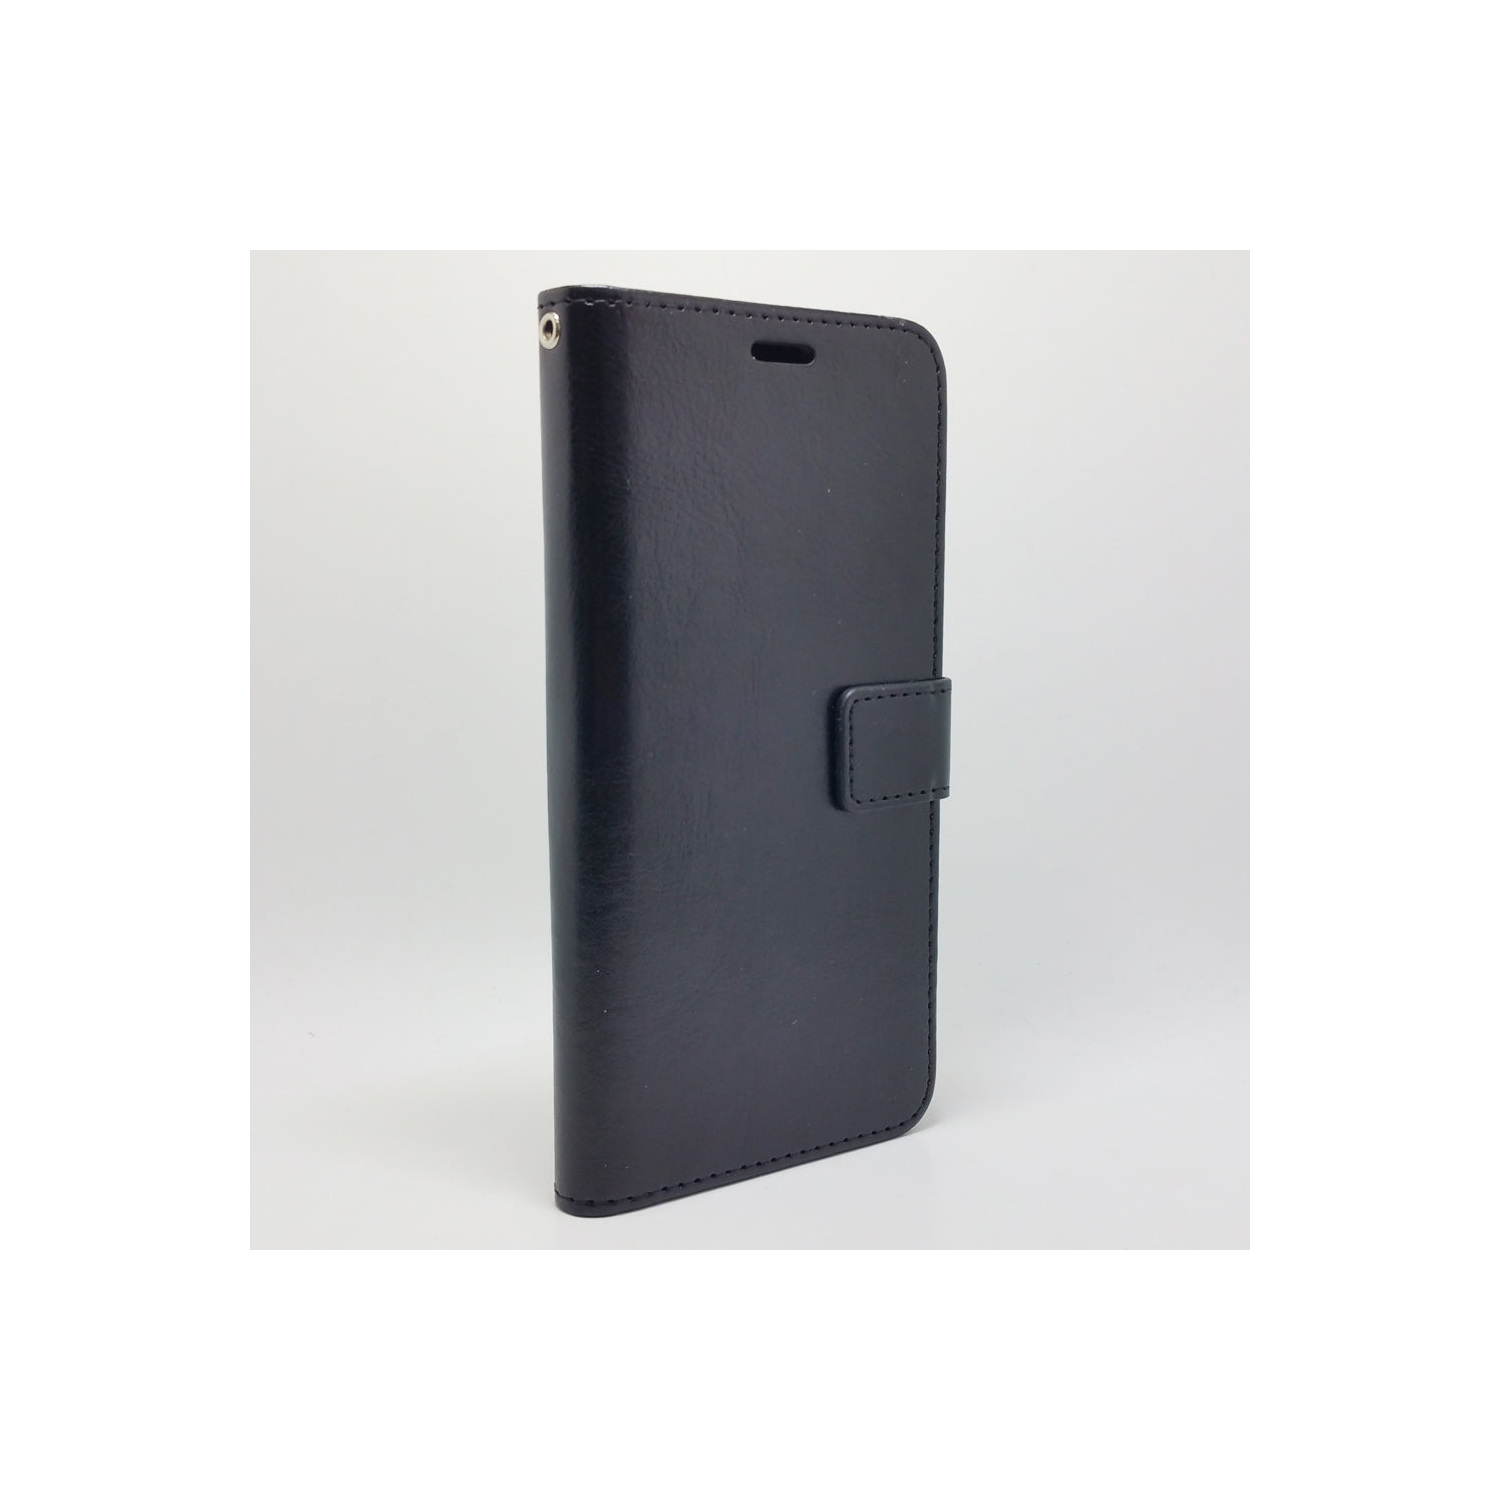 LG K10 2017 - Magnetic Wallet Card Holder Flip Stand Case Cover with Strap [Pro-Mobile]